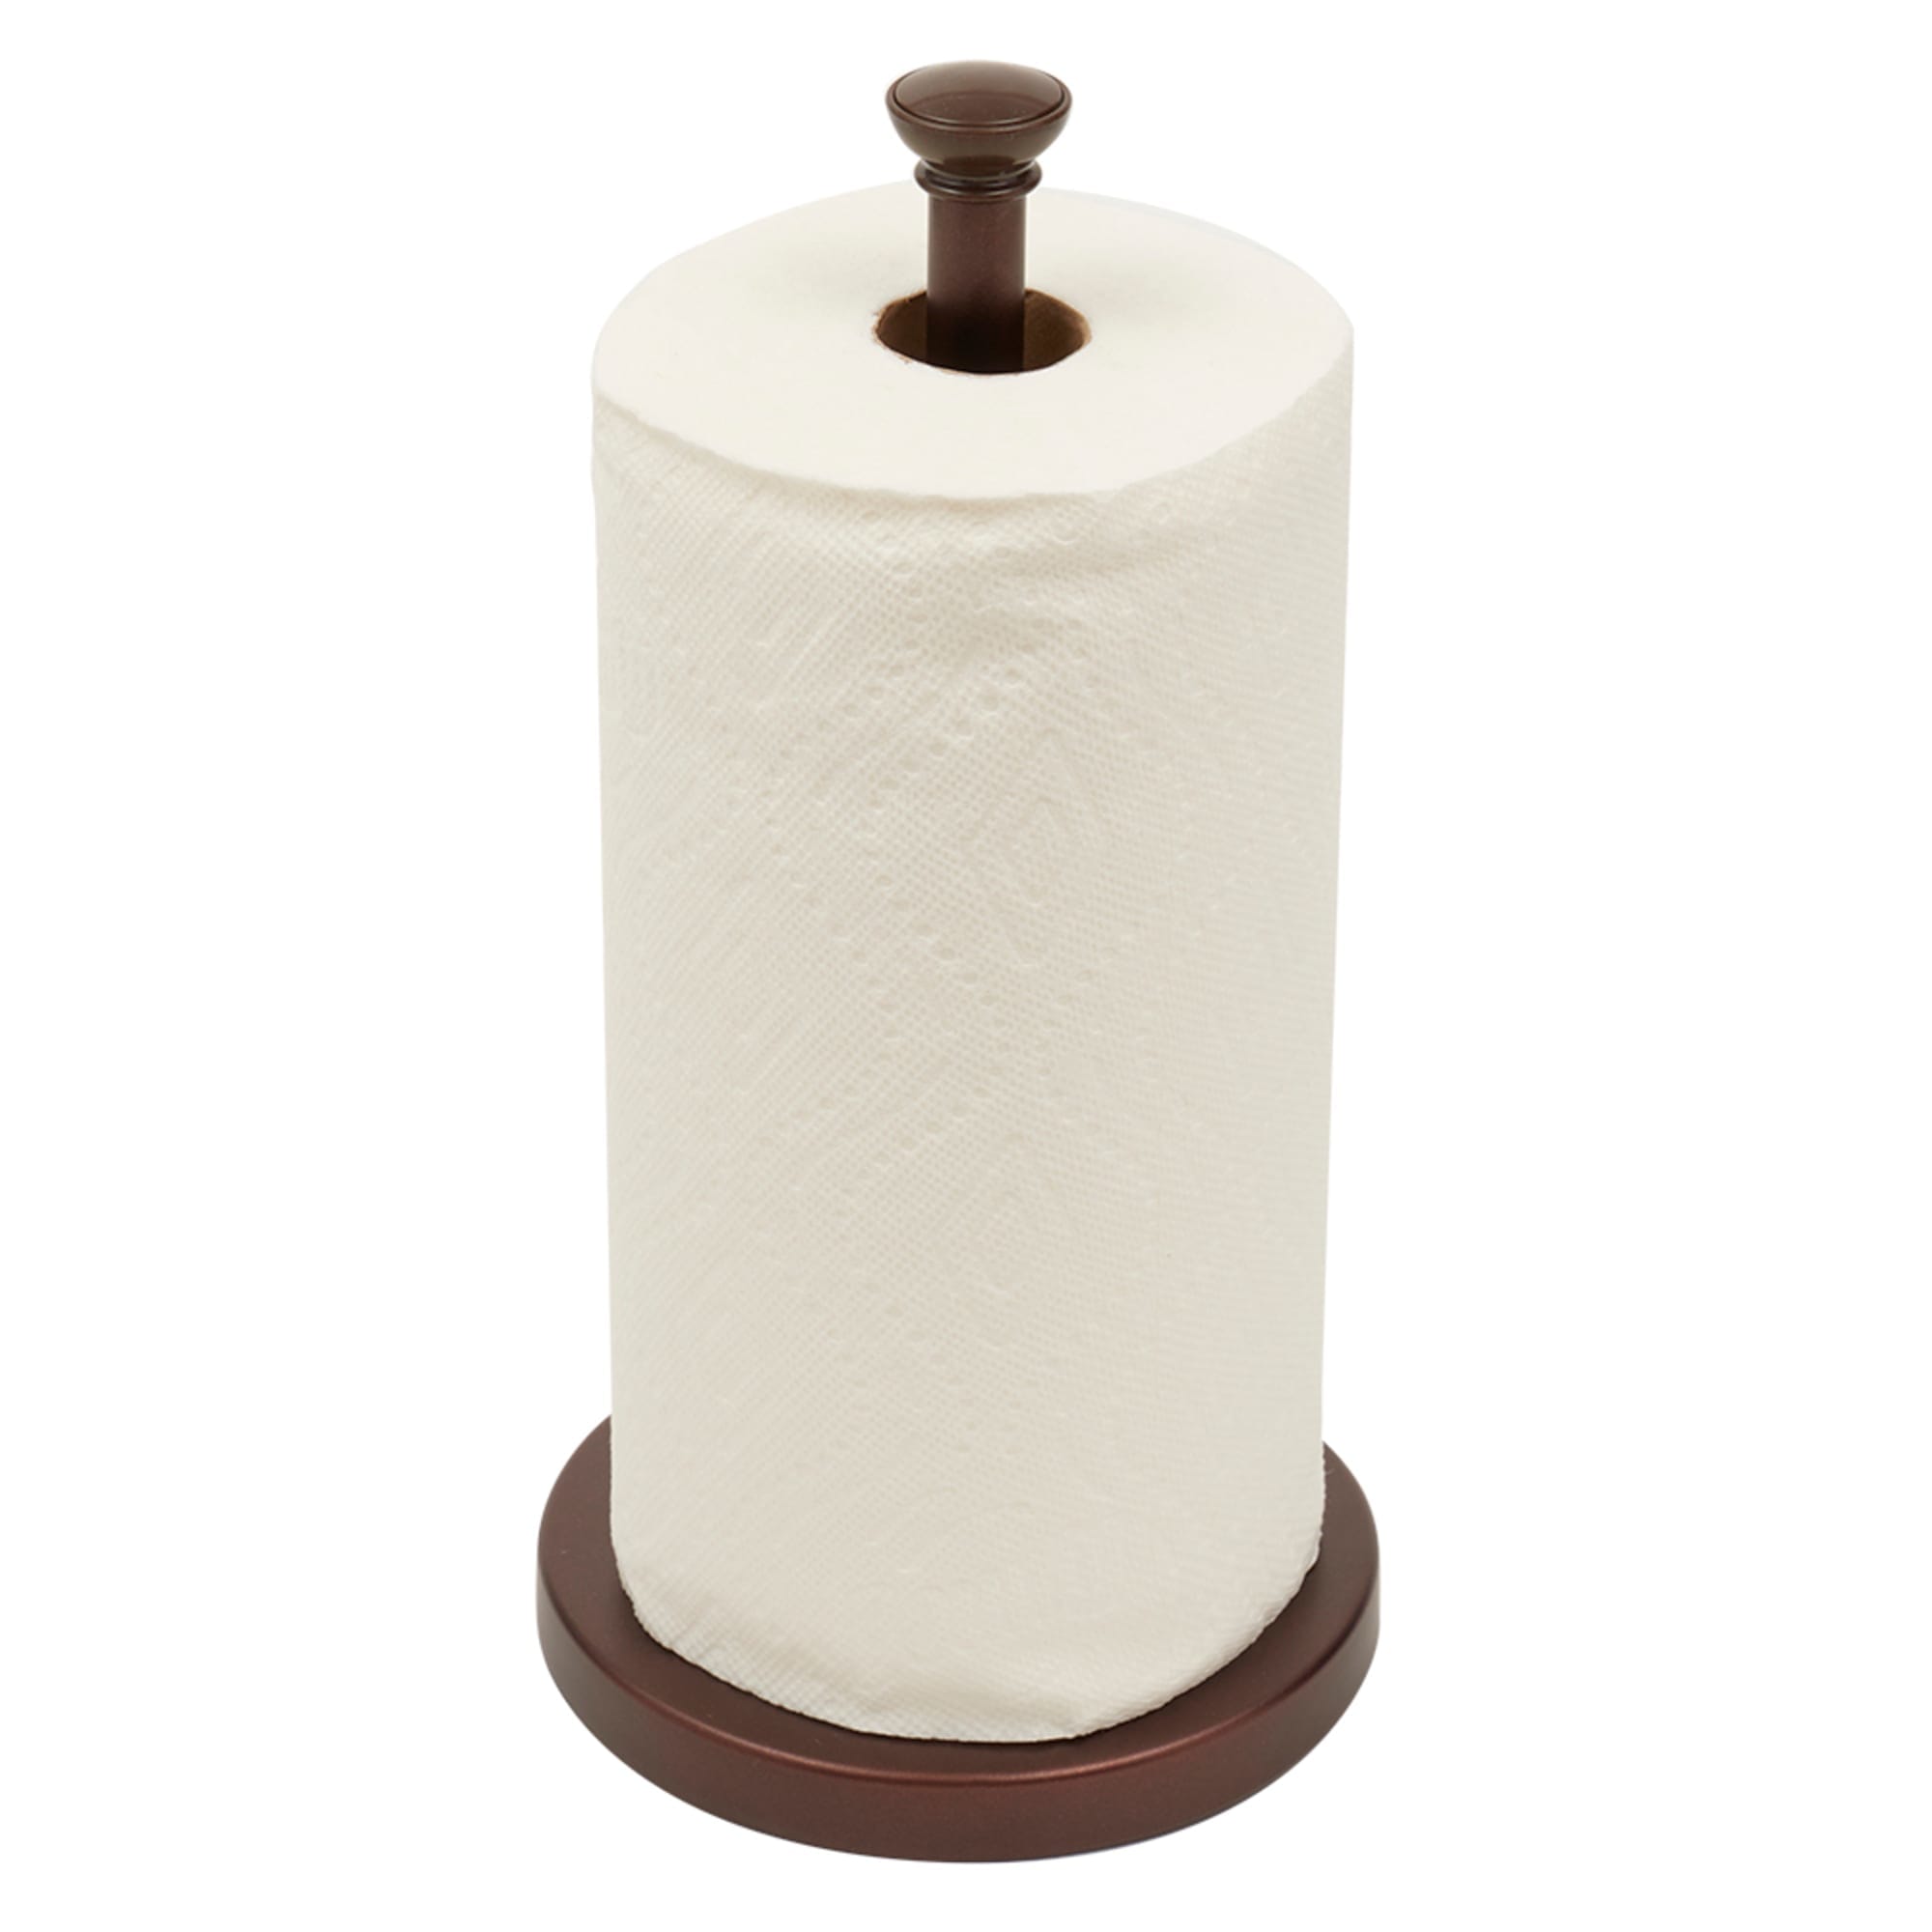 Home Basics Galleria Freestanding Paper Towel Holder, Bronze $8.00 EACH, CASE PACK OF 6